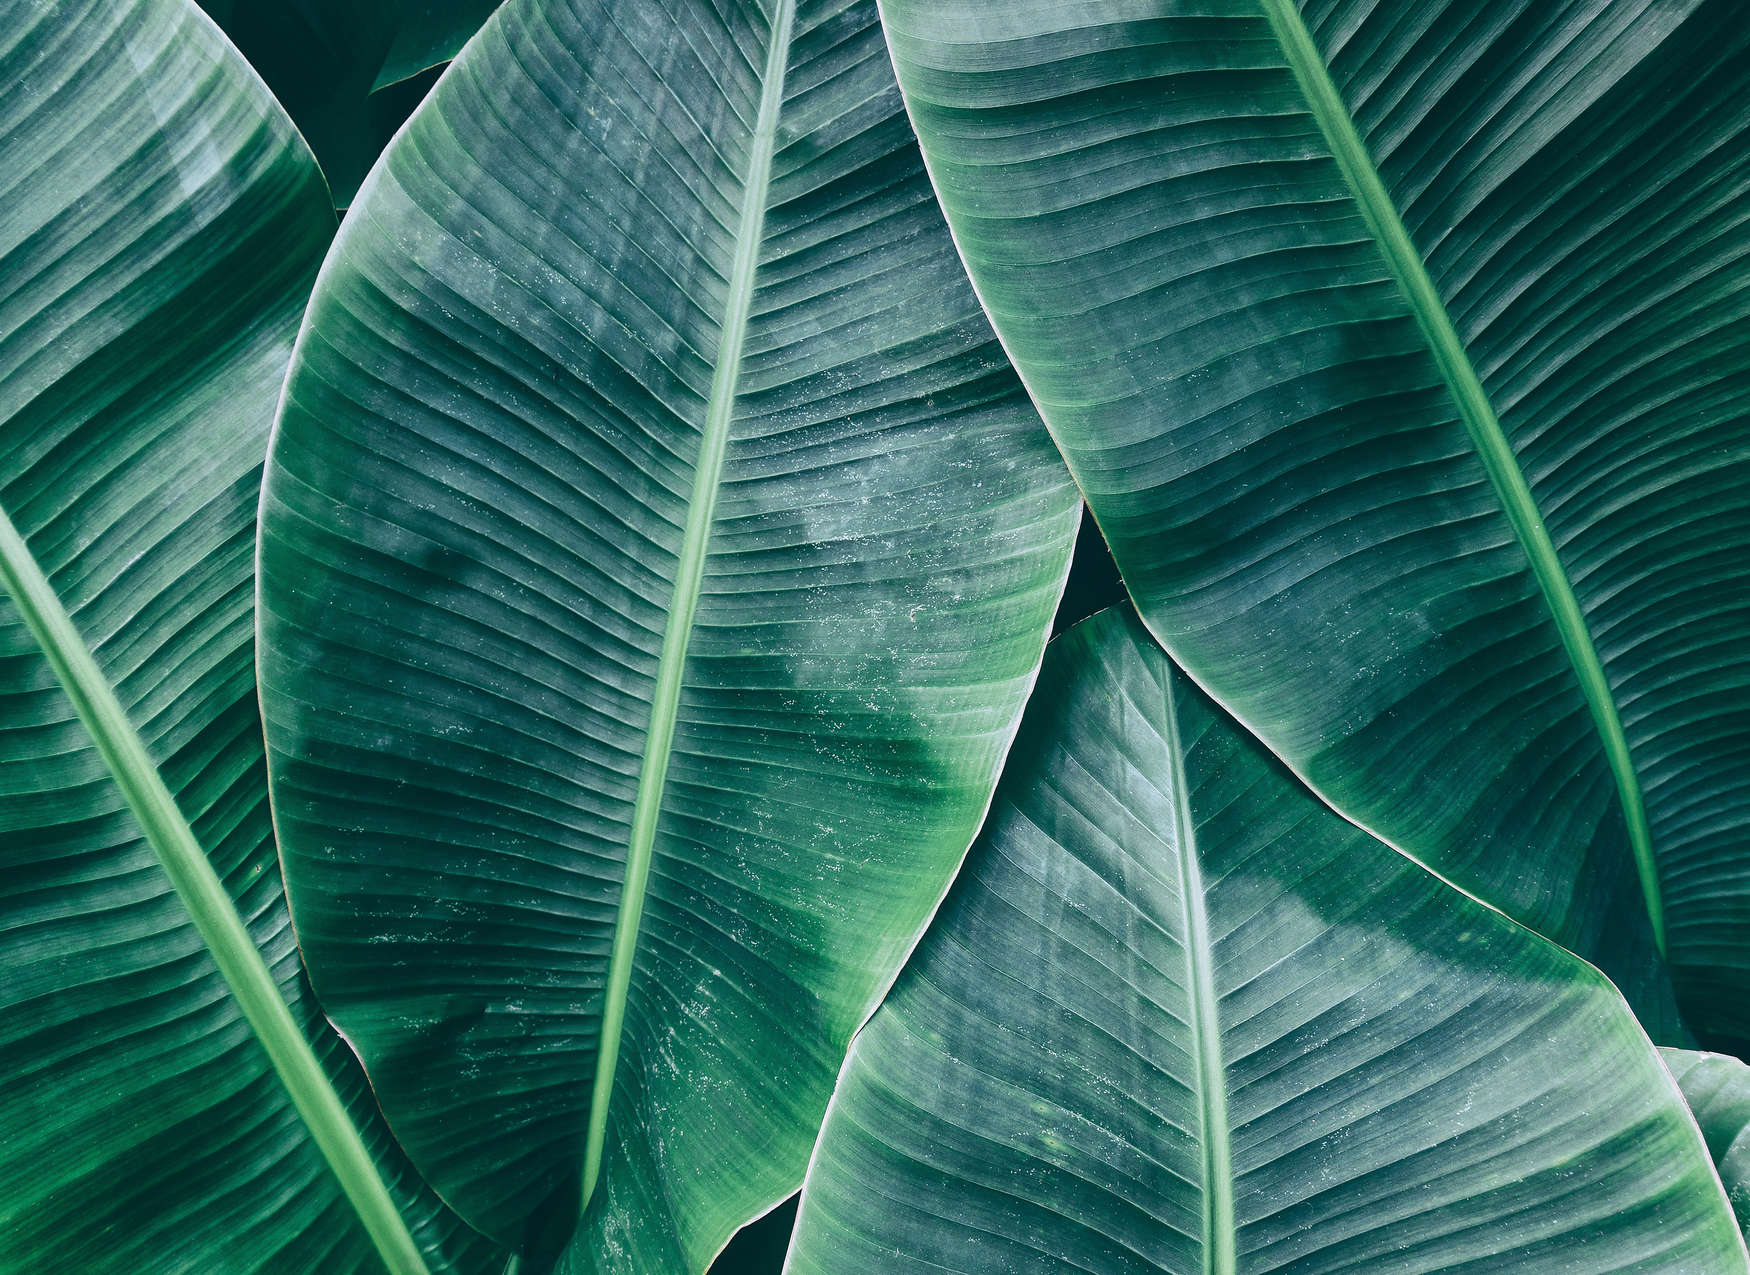             Sensazione di giungla con carta da parati in foglie di banano - Verde
        